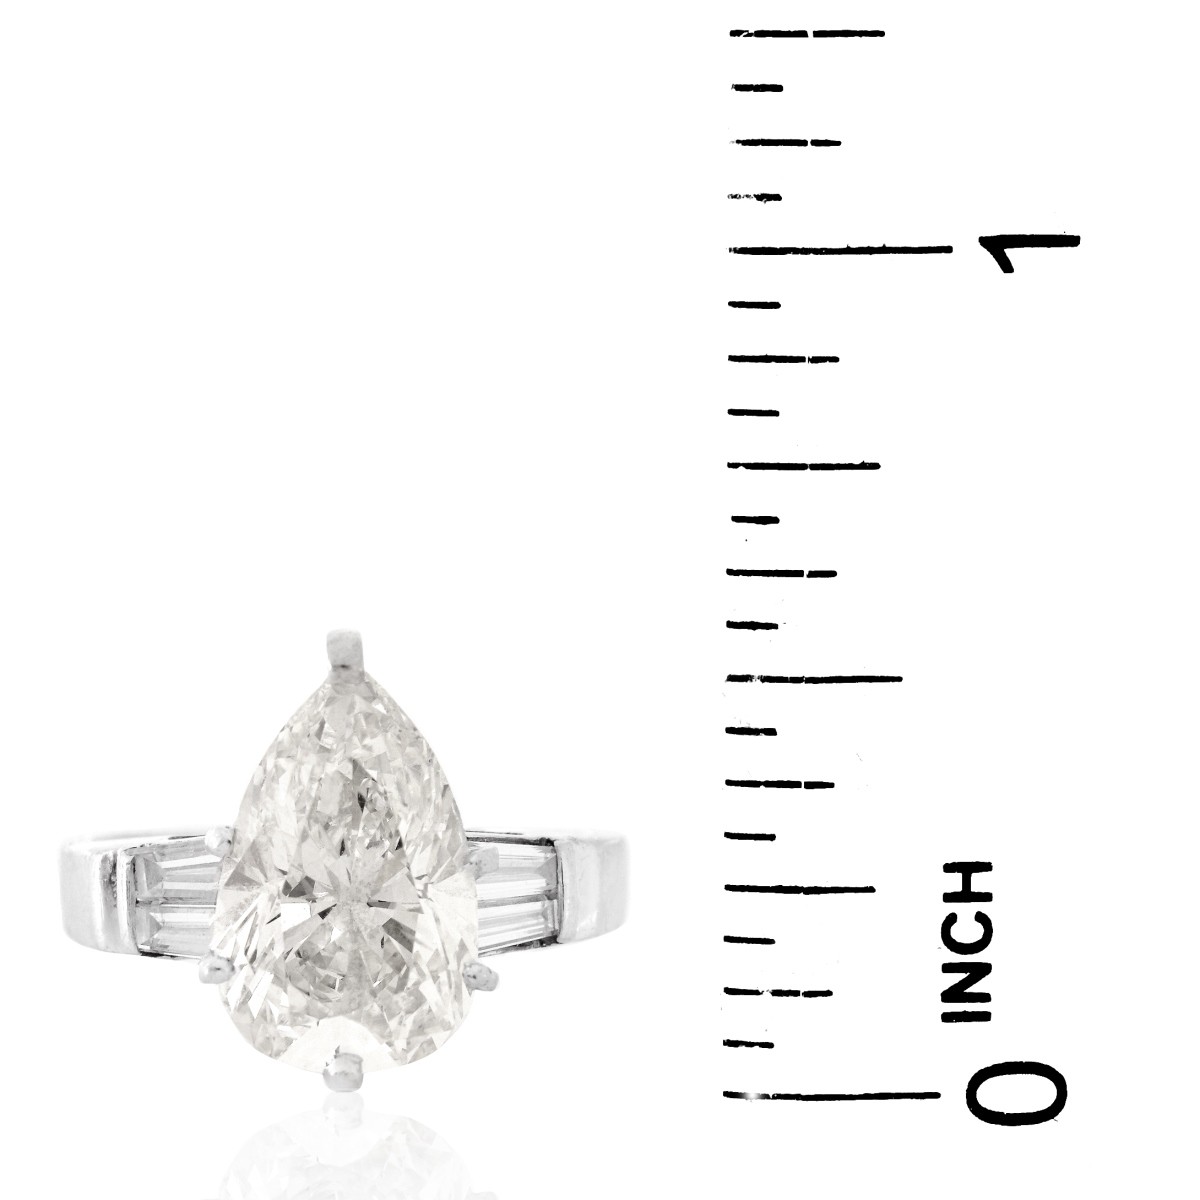 GIA Certified 3.06ct Diamond Ring